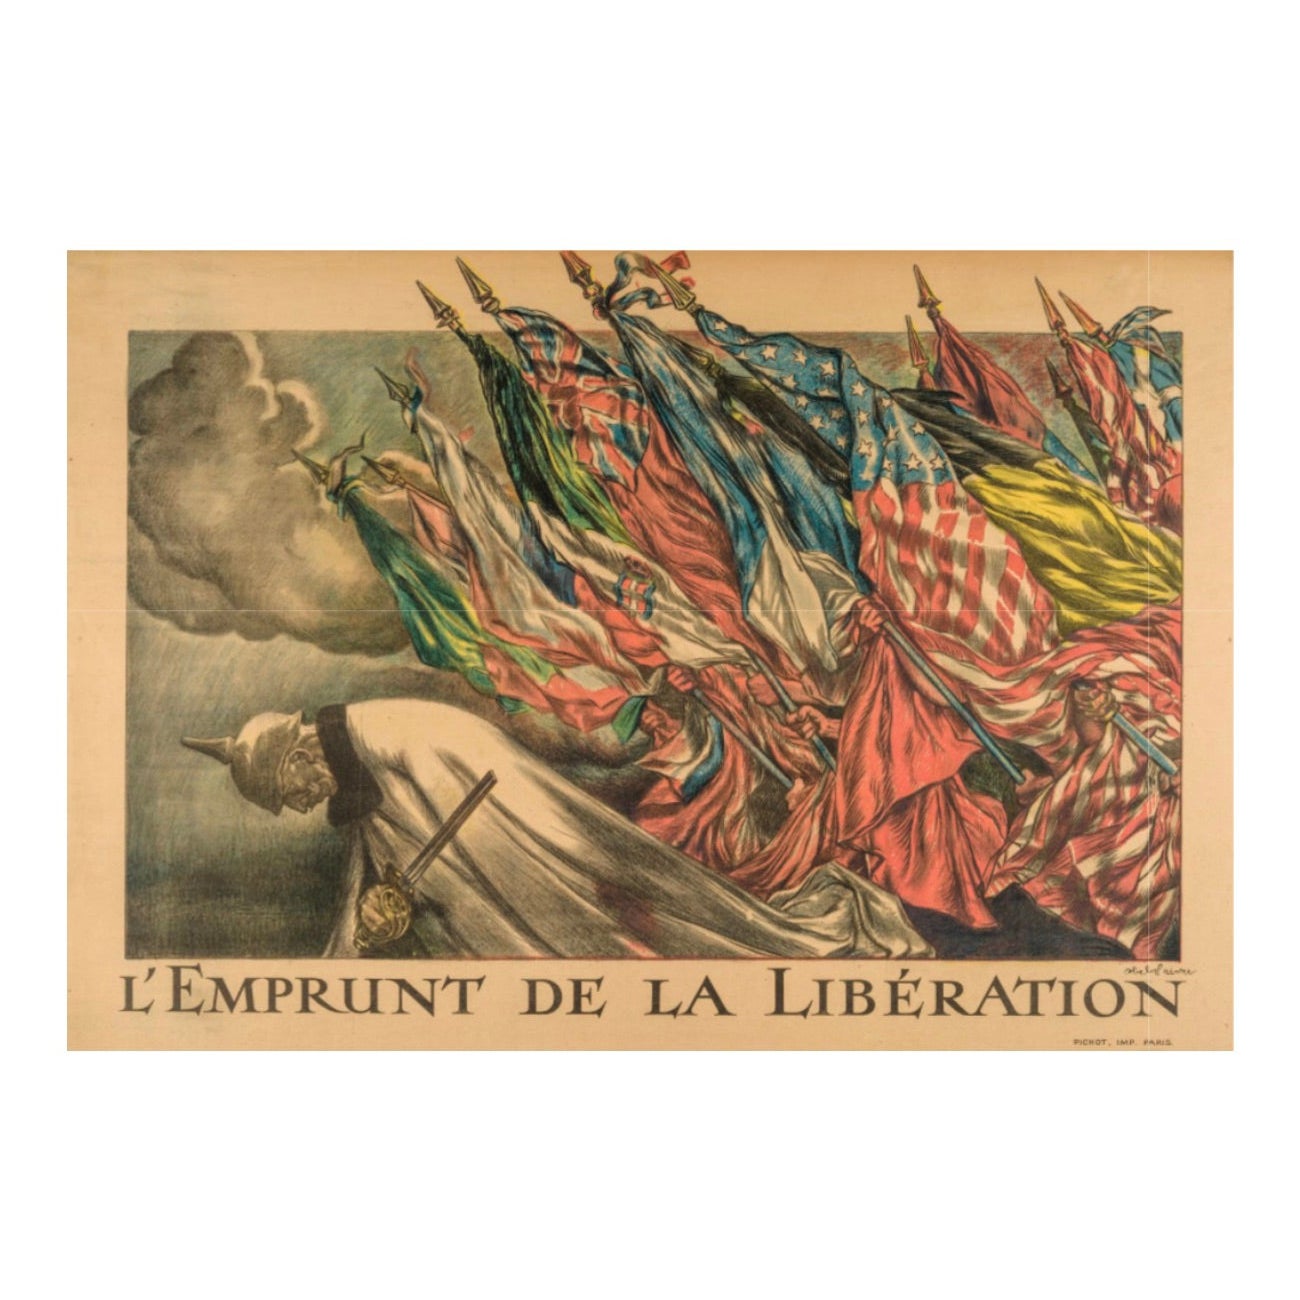 L’ Emprunt de la Liberation (The Loan of Liberation) For Sale